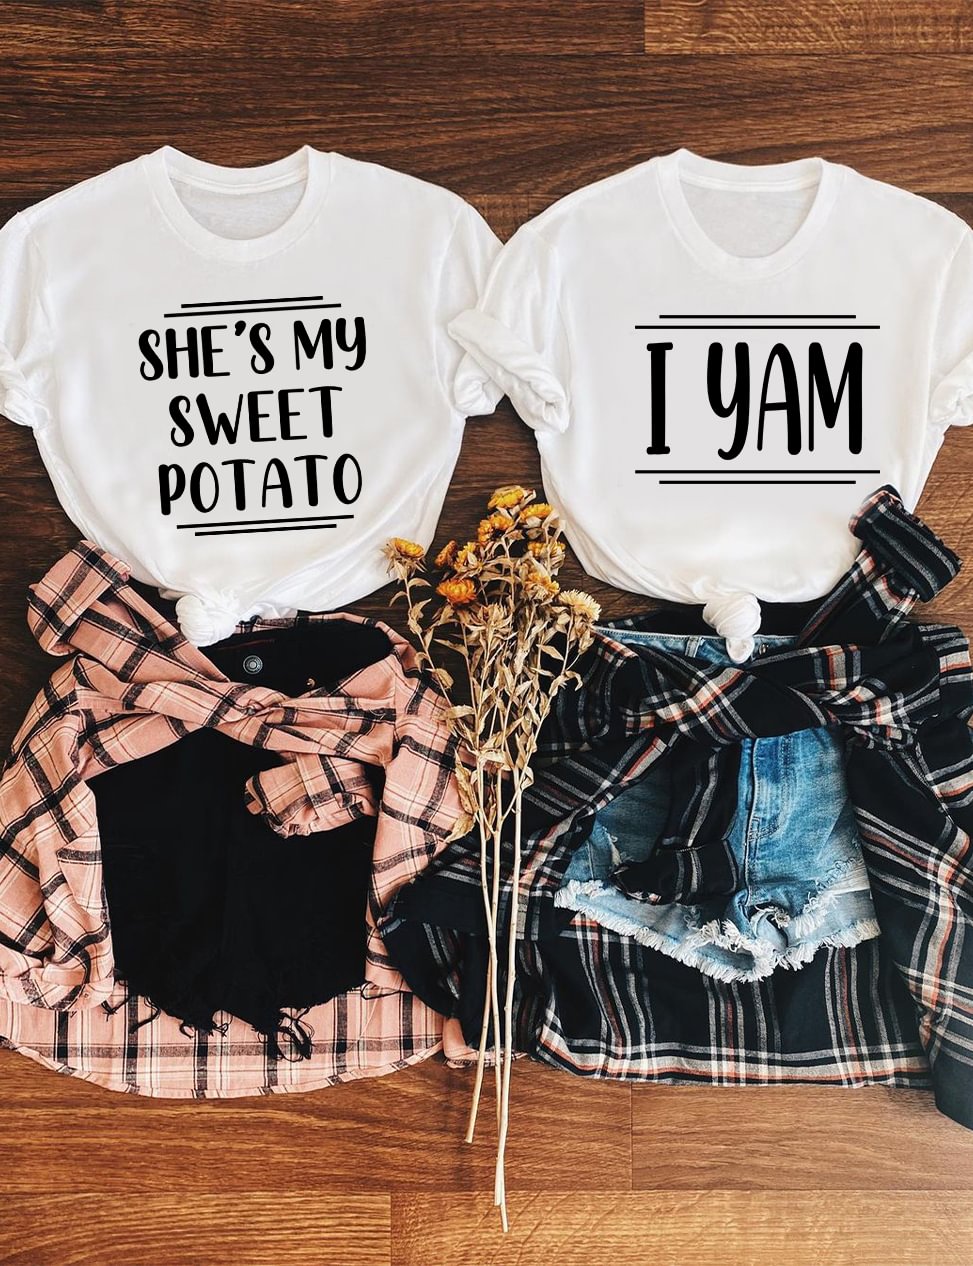 She's My Sweet Potato T-Shirt